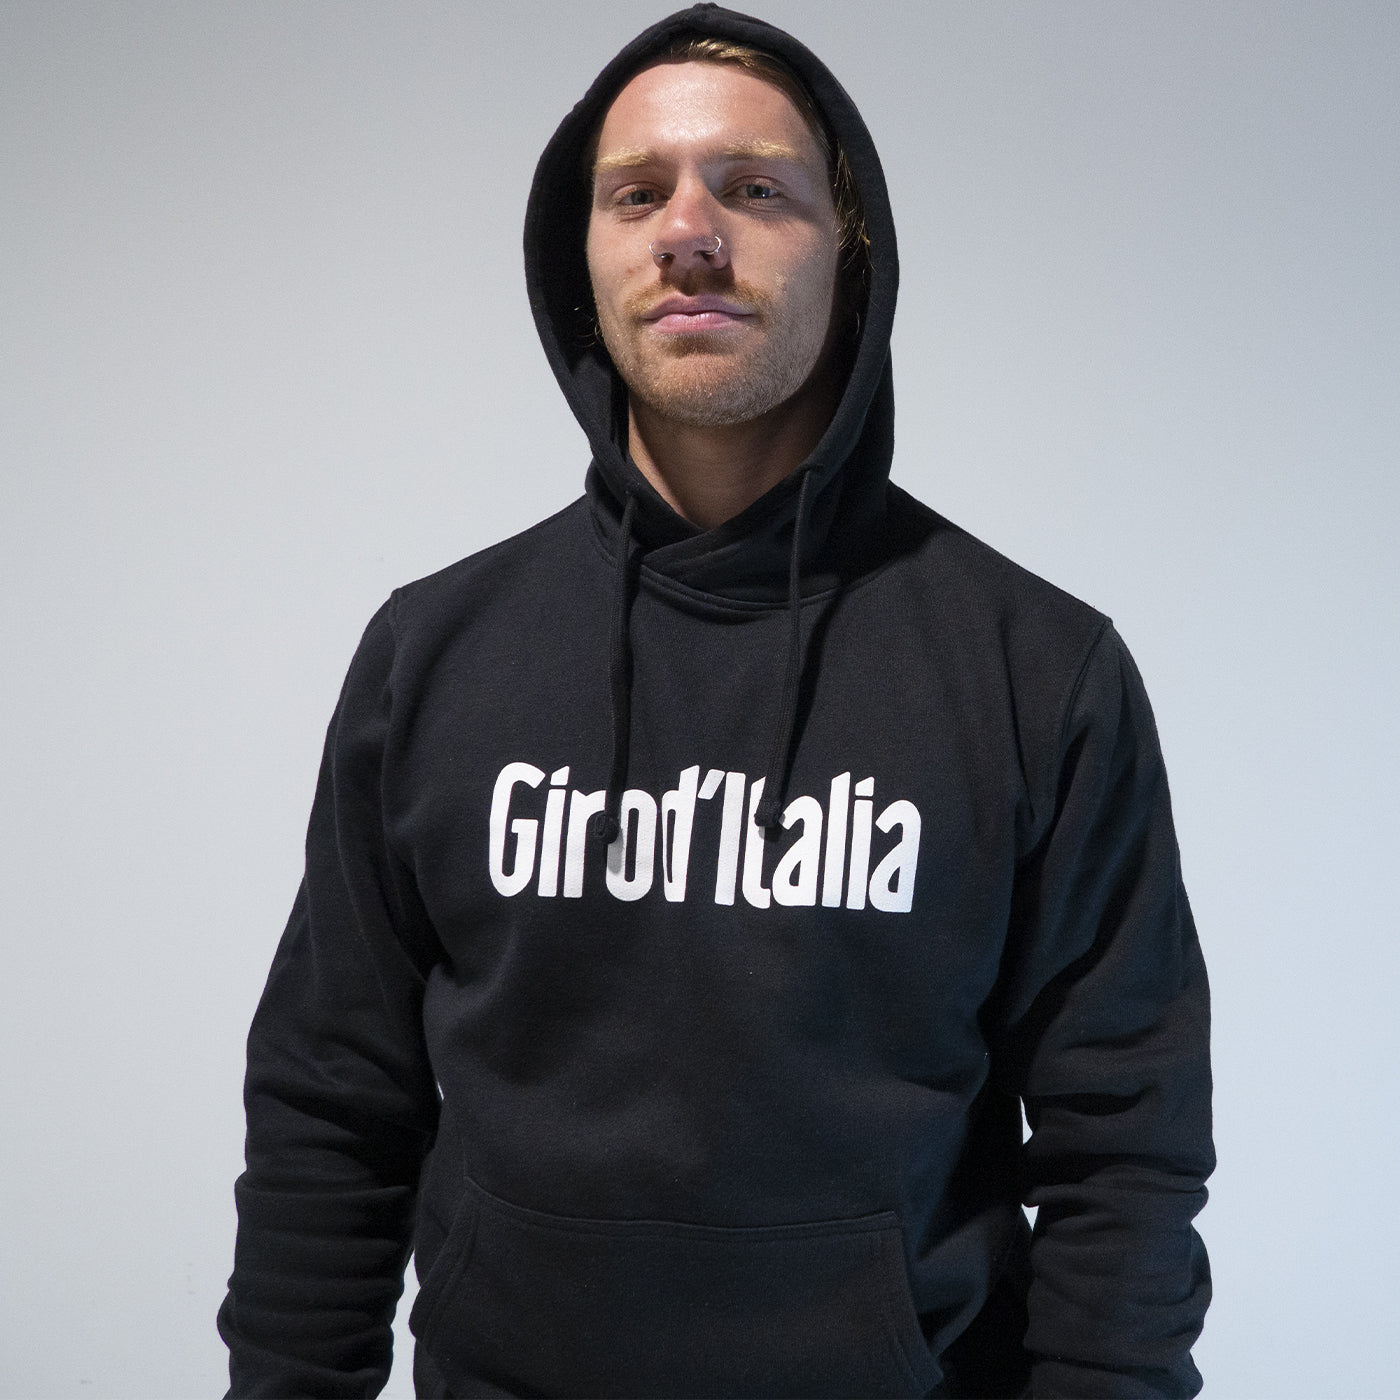 Giro d'Italia sweatshirt hoodie - Black